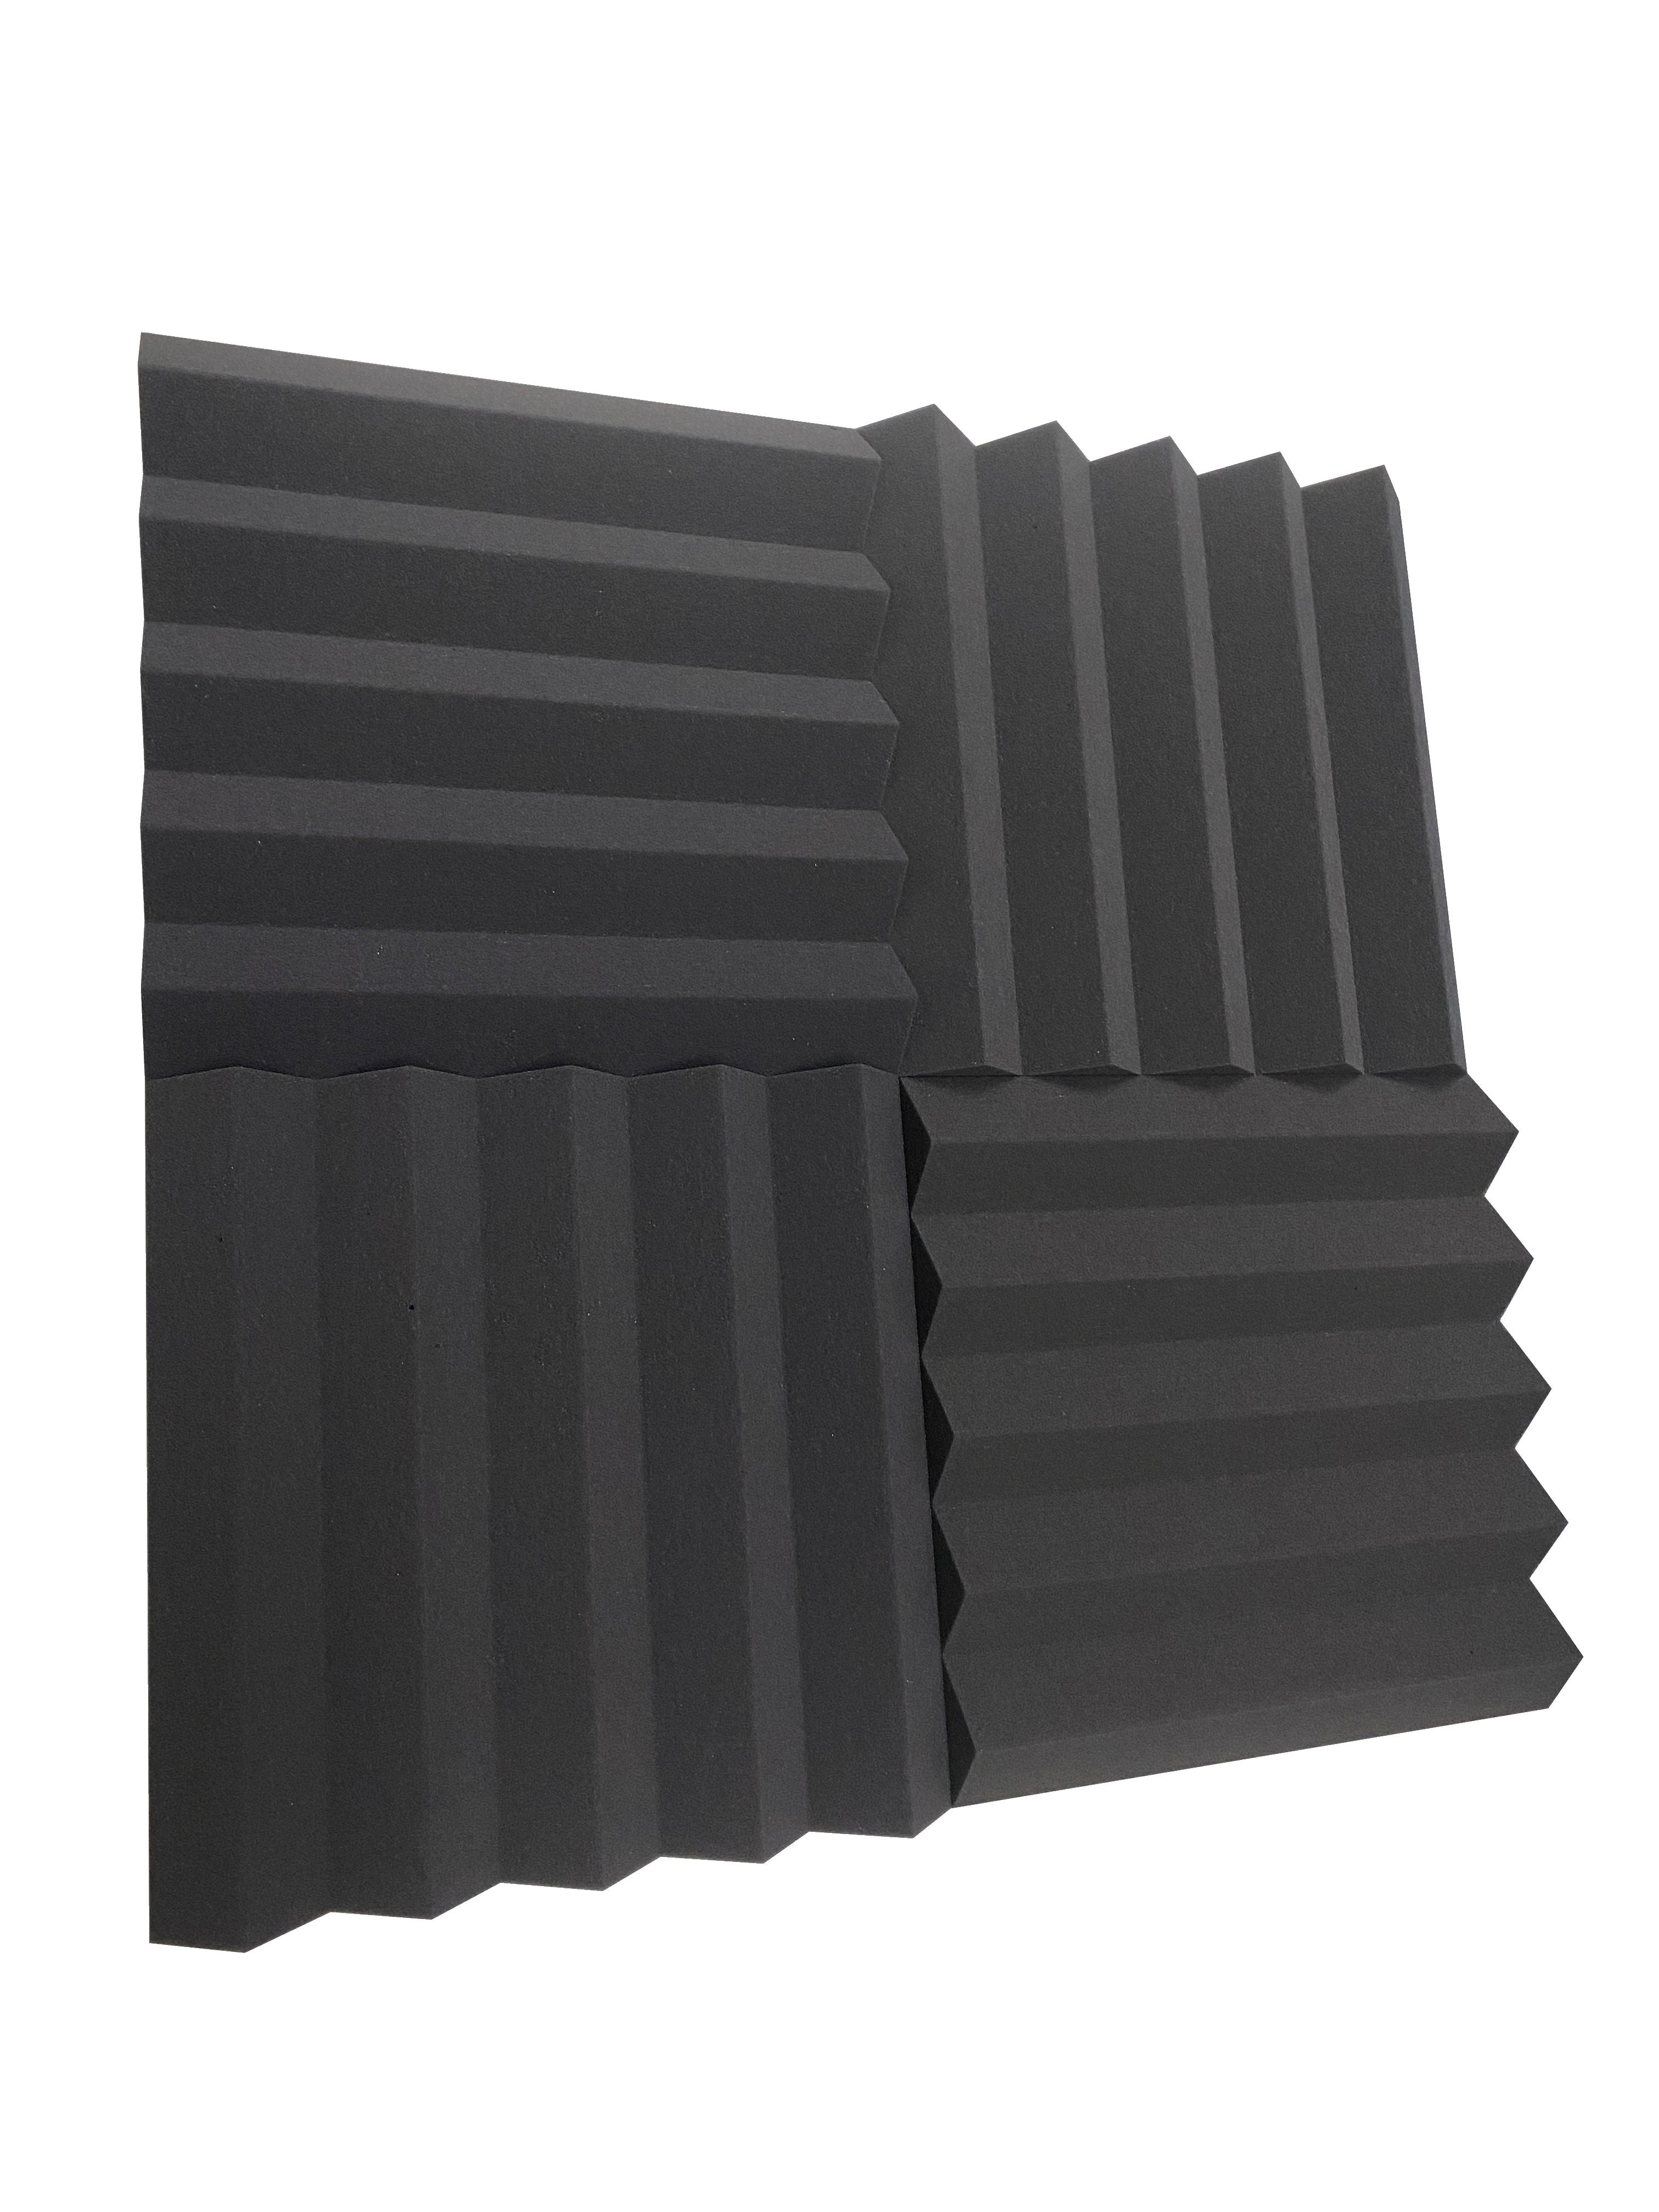 Buy dark-grey Wedge PRO Combo Acoustic Studio Foam Tile Kit